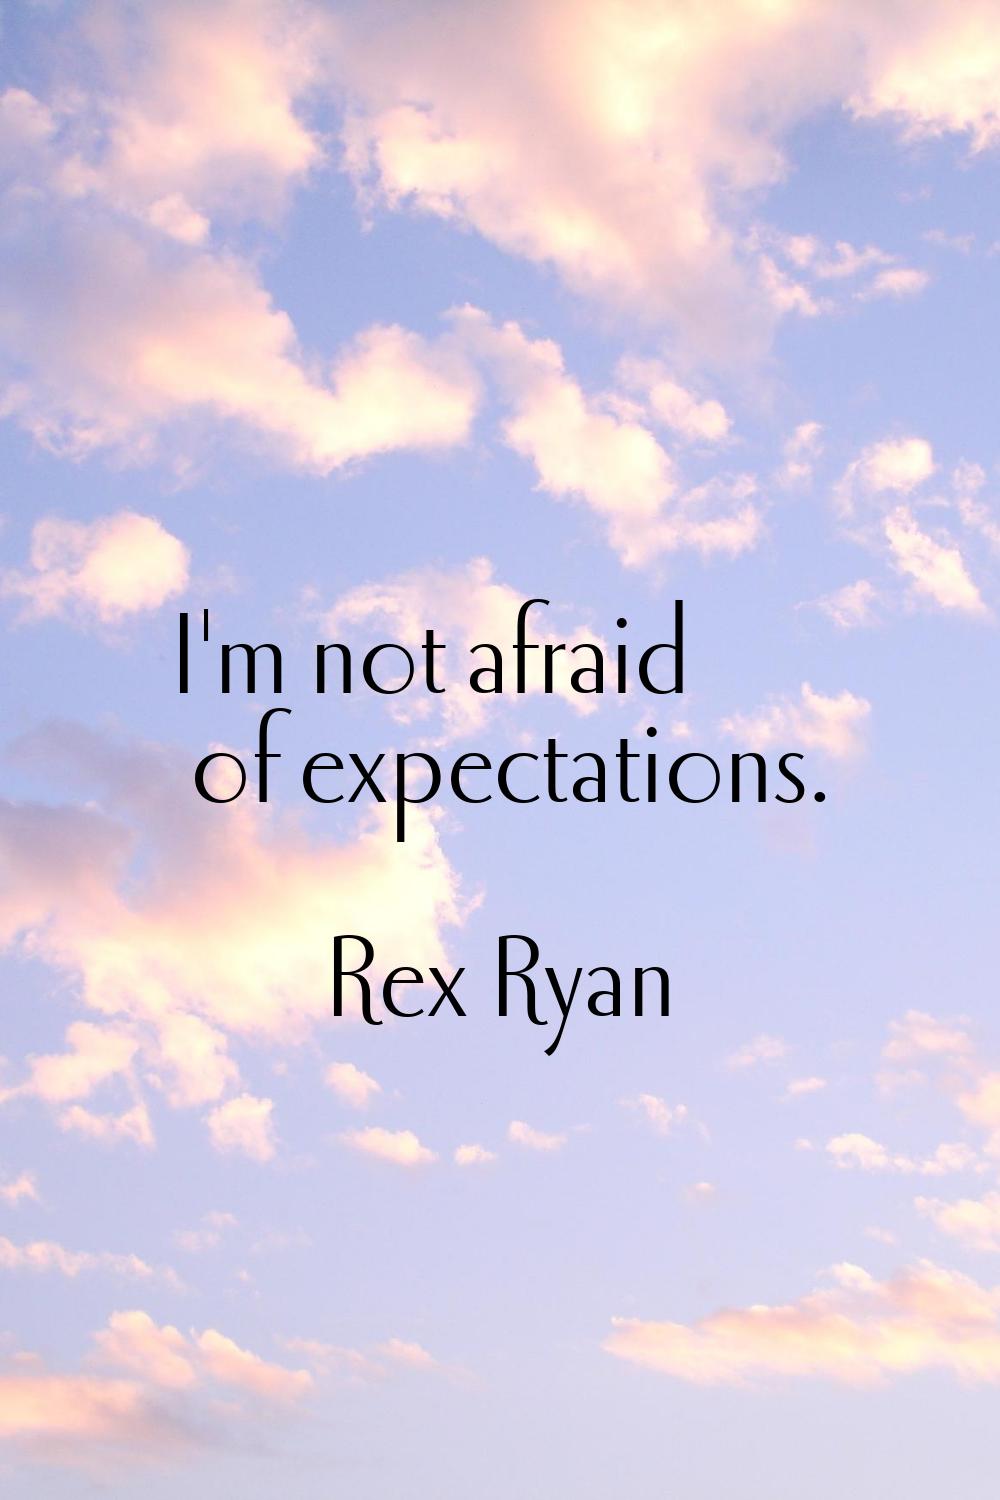 I'm not afraid of expectations.